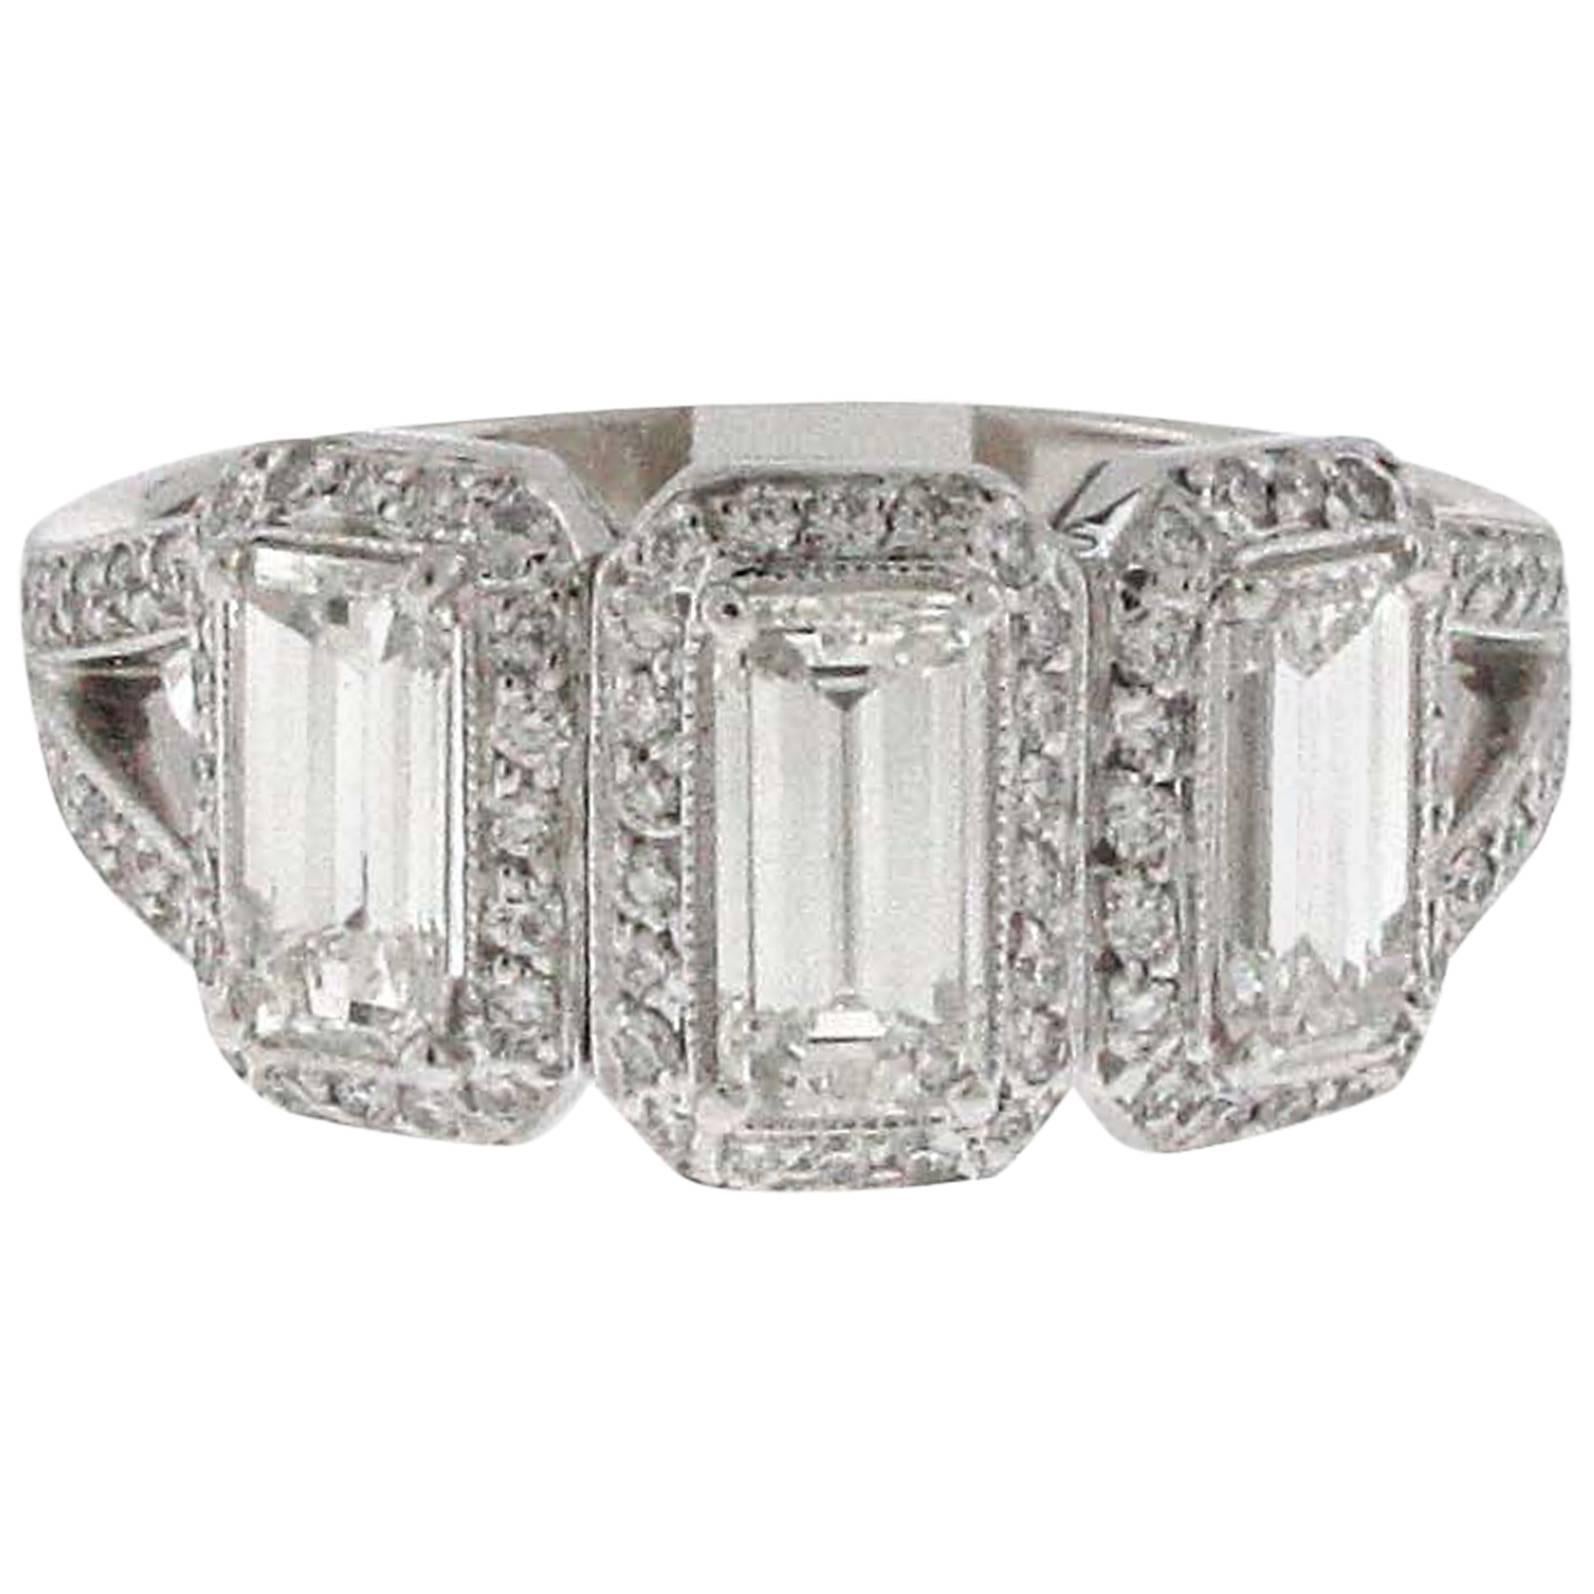 Three-Stone Emerald Cut White Diamond Halo Ring Set in Platinum